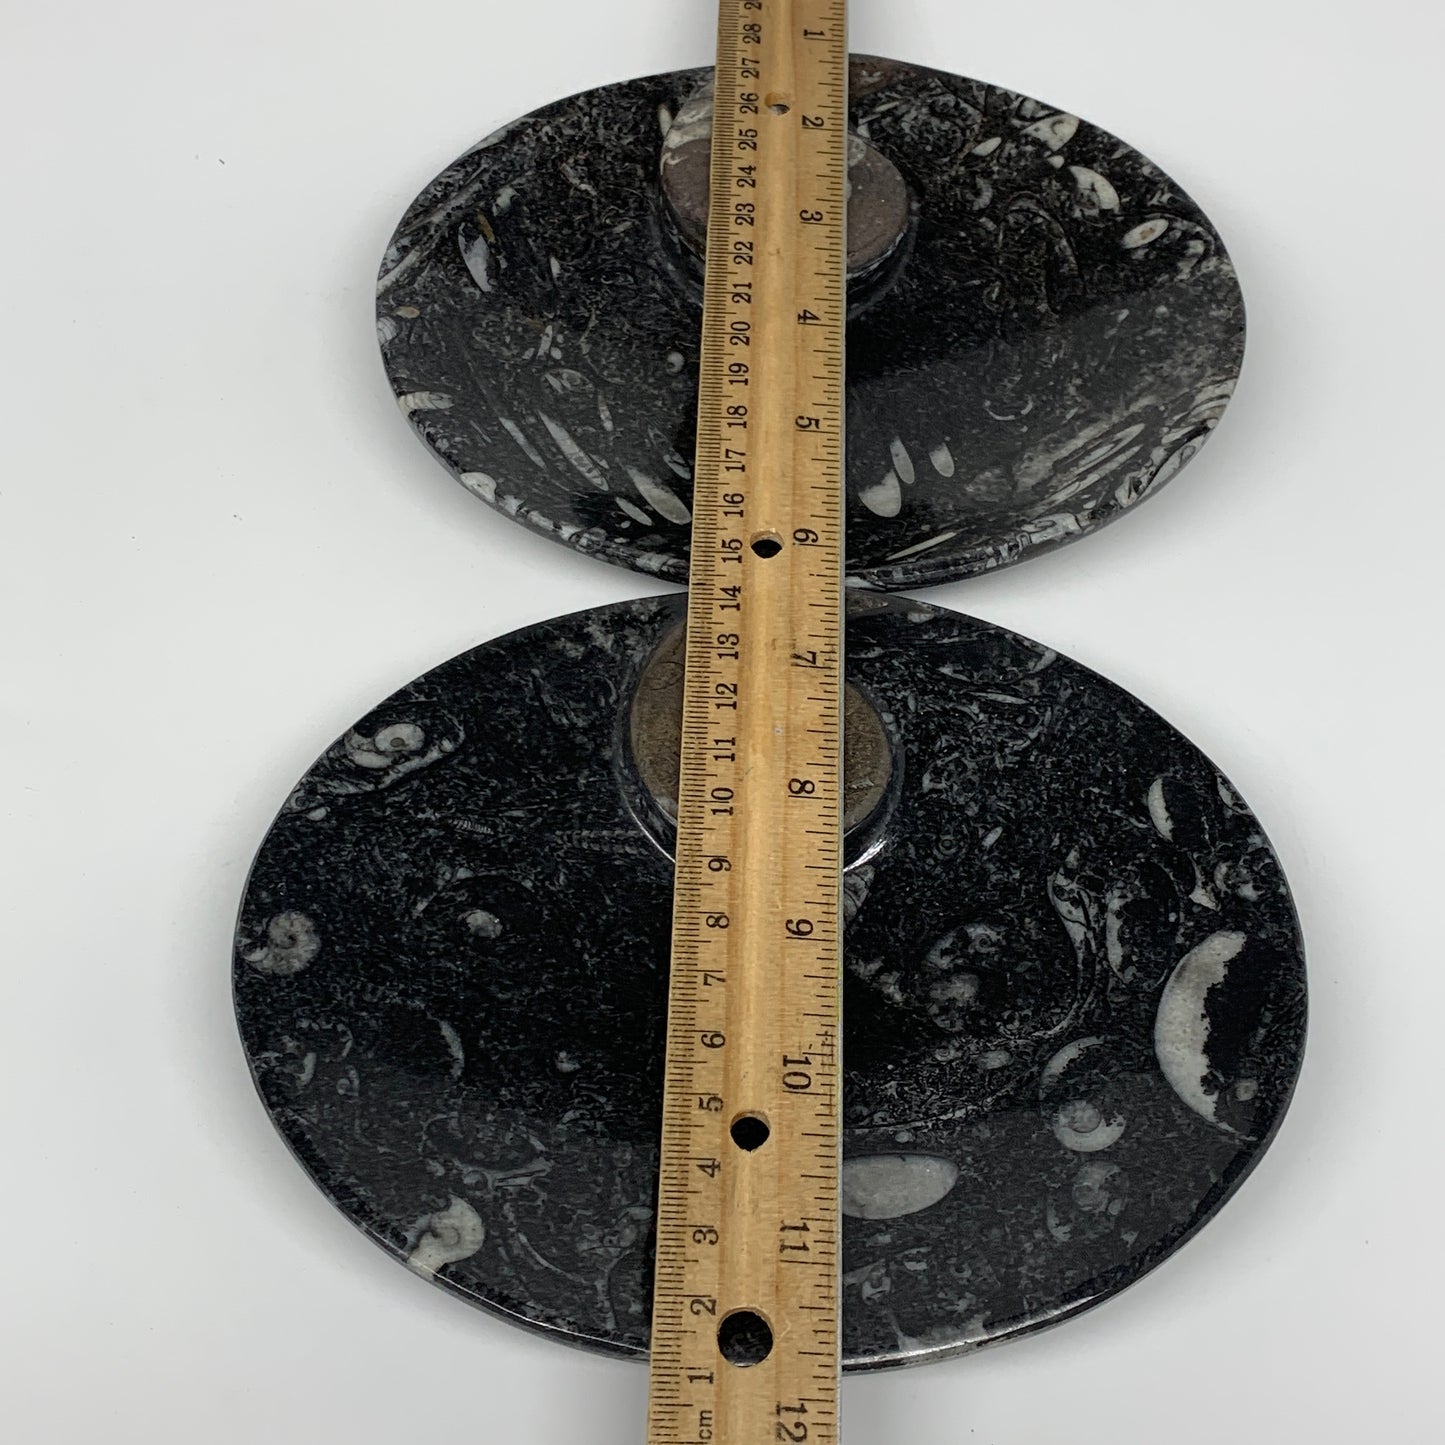 2Pcs, 6.5"x5.25" Black Fossils Ammonite Orthoceras Bowl Oval Ring @Morocco,B8806